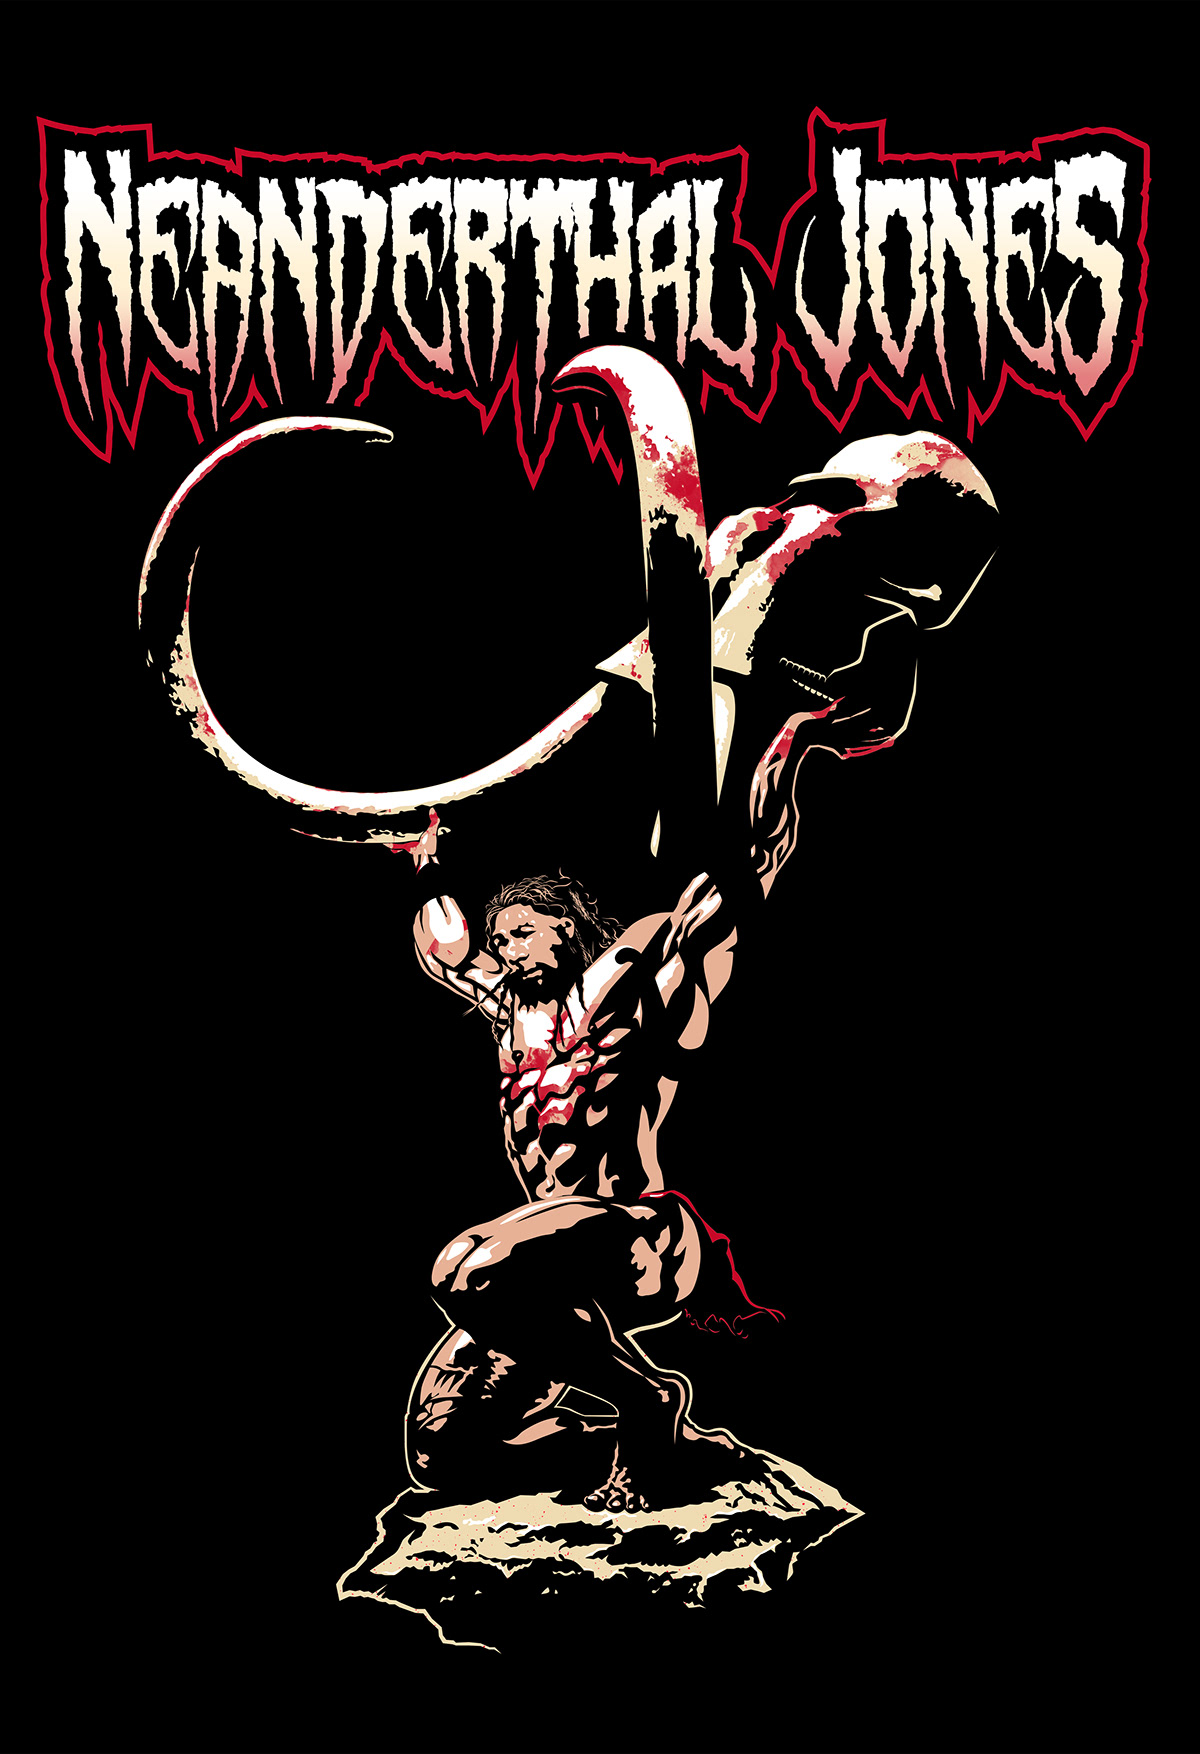 Album artwork band cover design Jones neanderthal shirt t-shirt tshirt